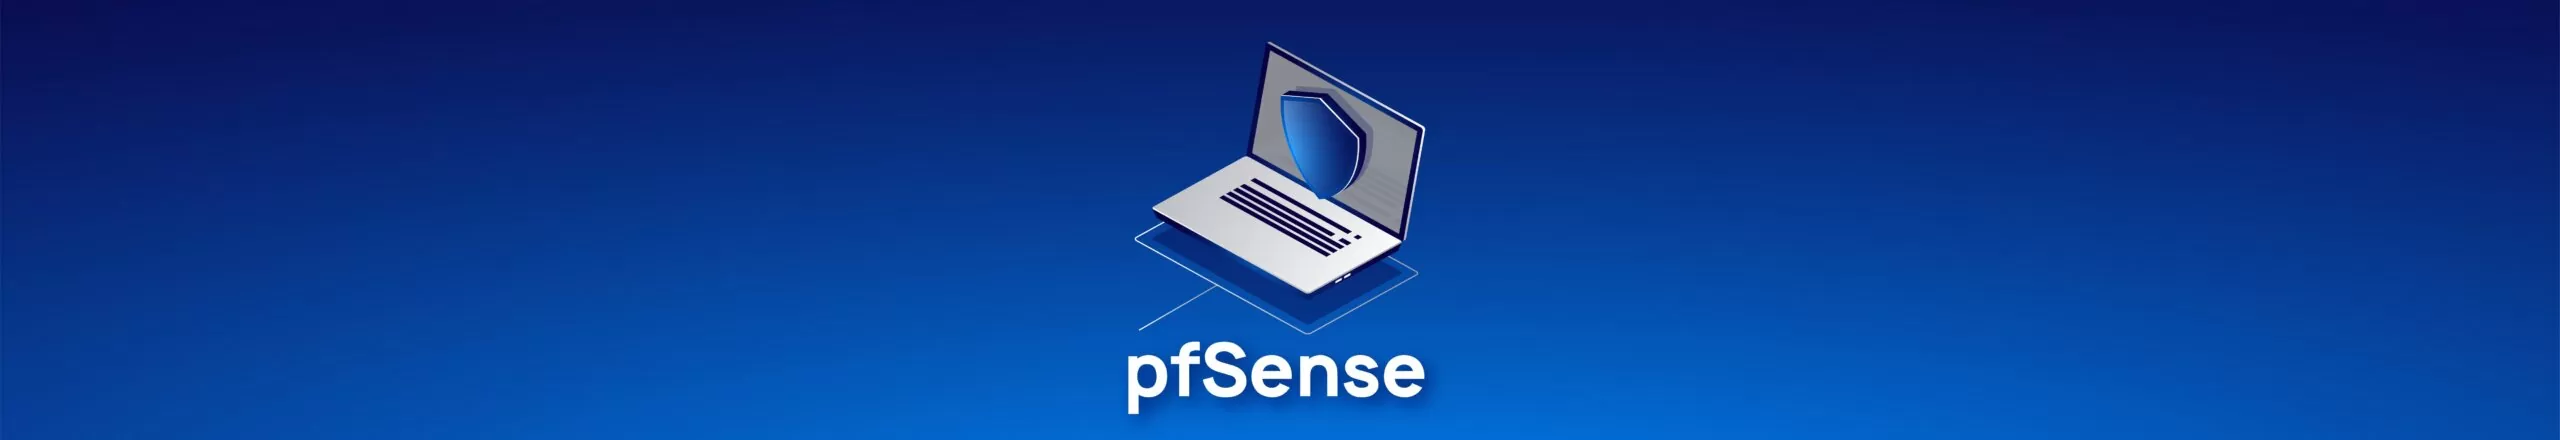 Illustration representing the pfSense update